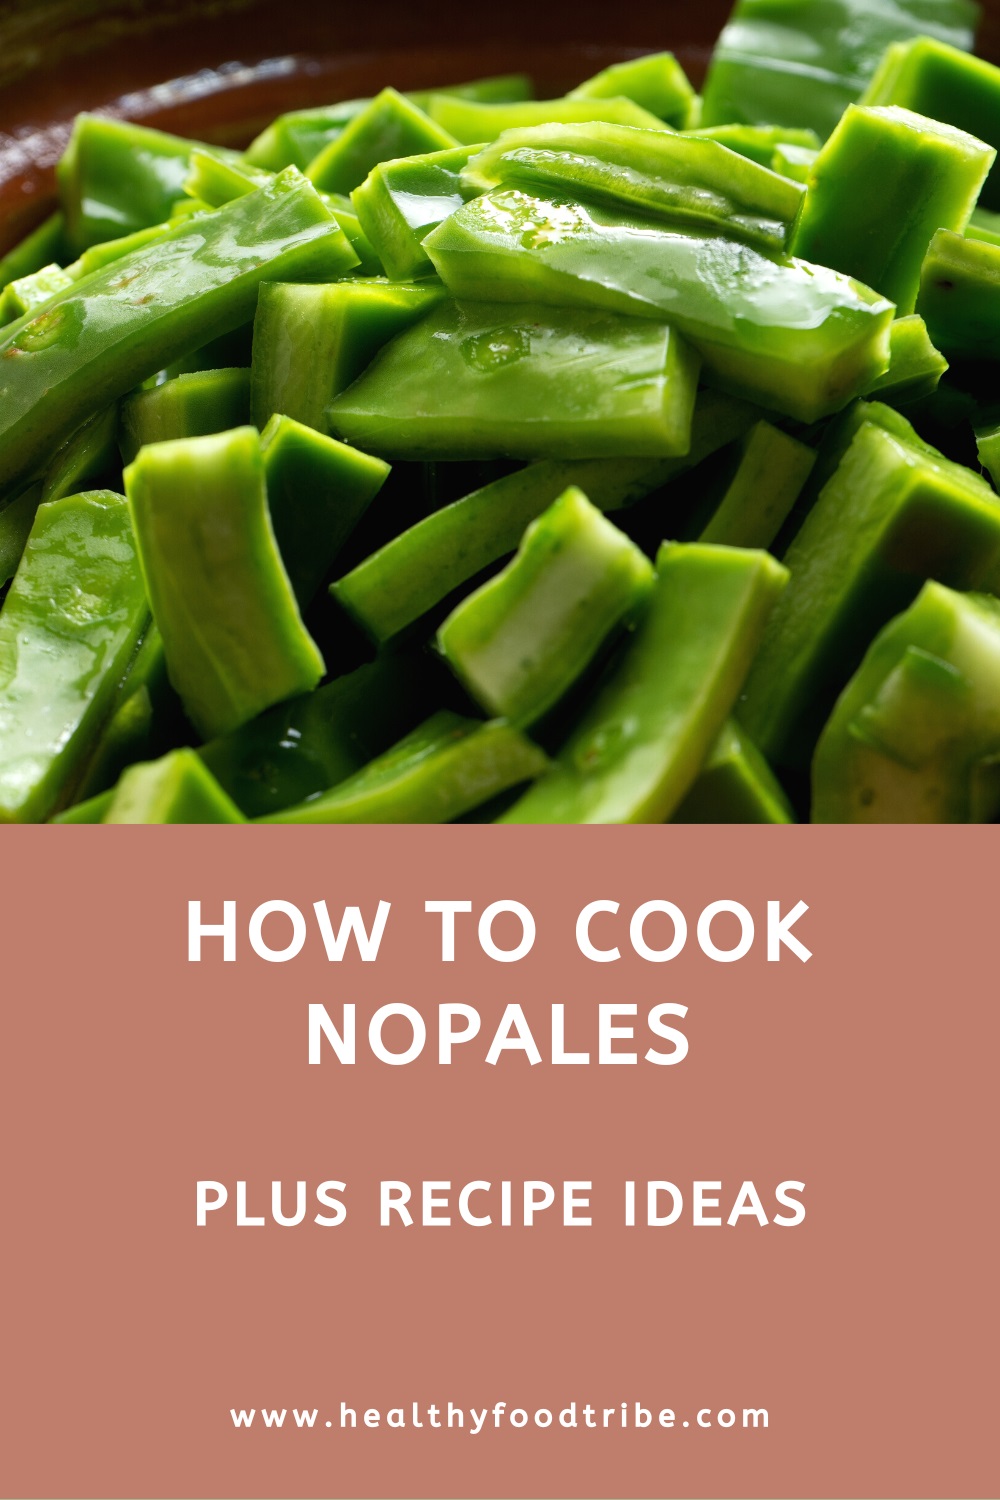 How to prepare and cook nopales (plus recipe ideas)